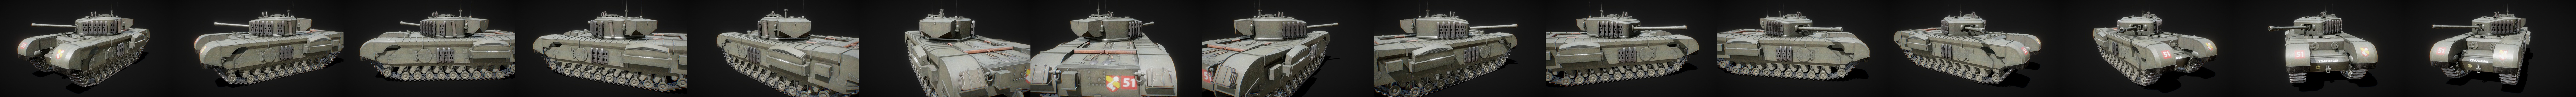 Churchill Mk. VII A22F- WW2 British Heavy Tank - Buy Royalty Free